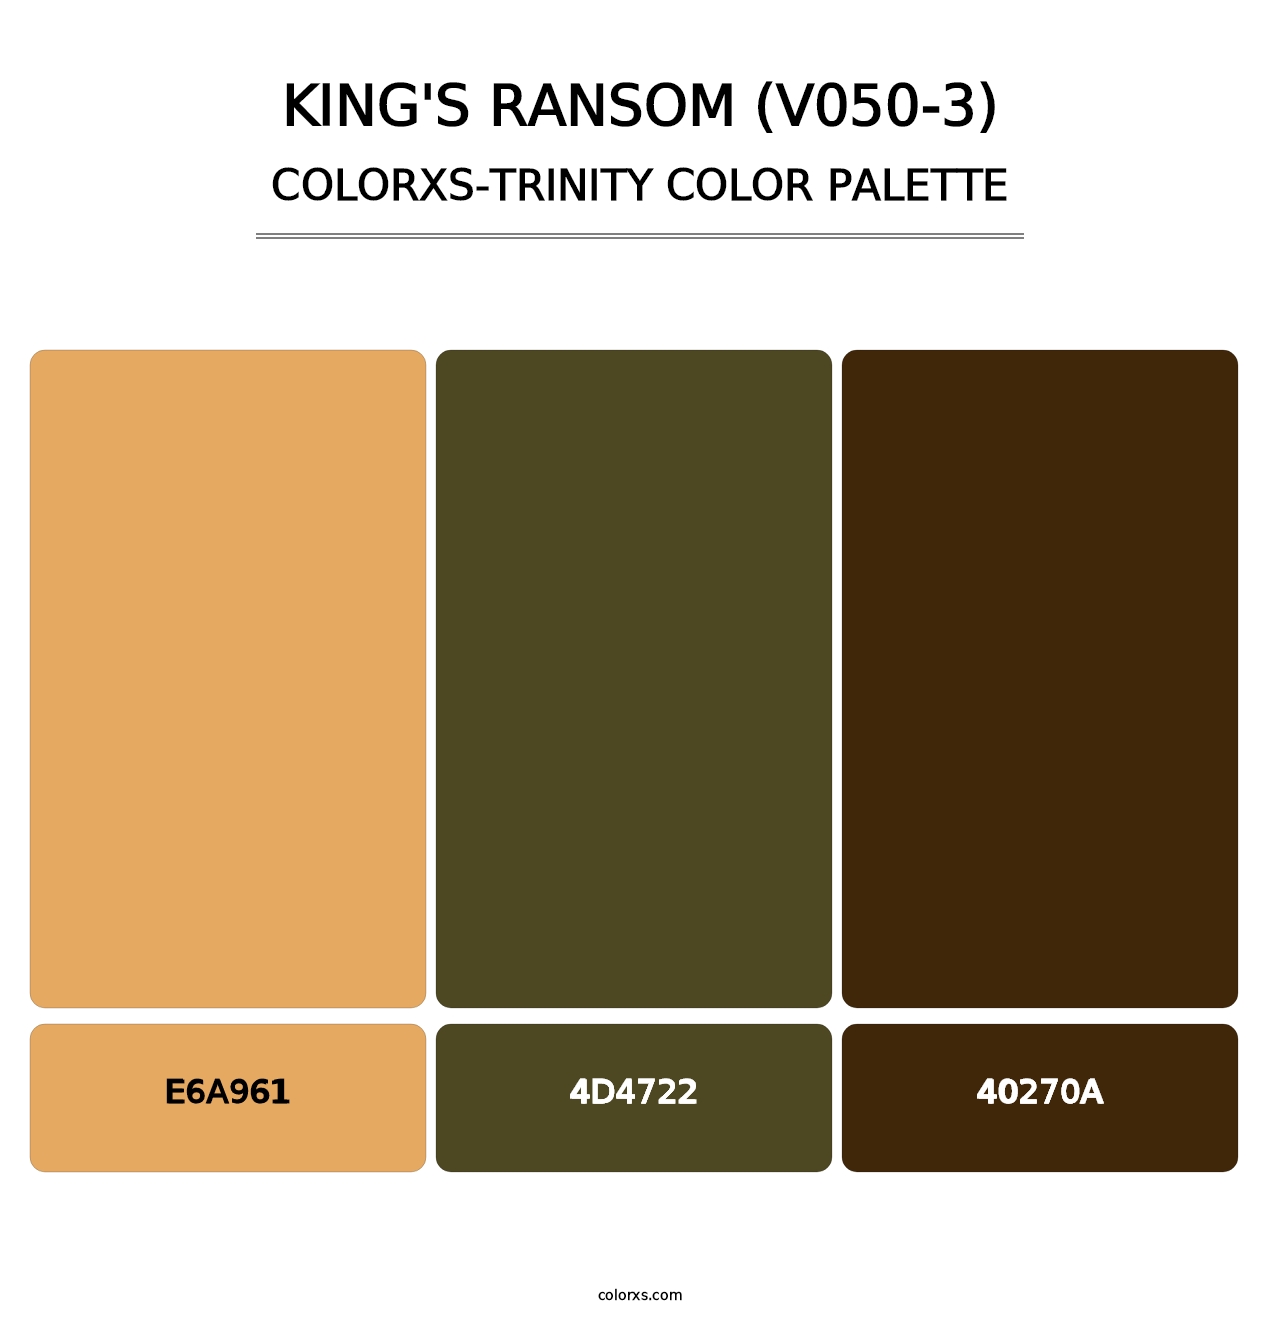 King's Ransom (V050-3) - Colorxs Trinity Palette